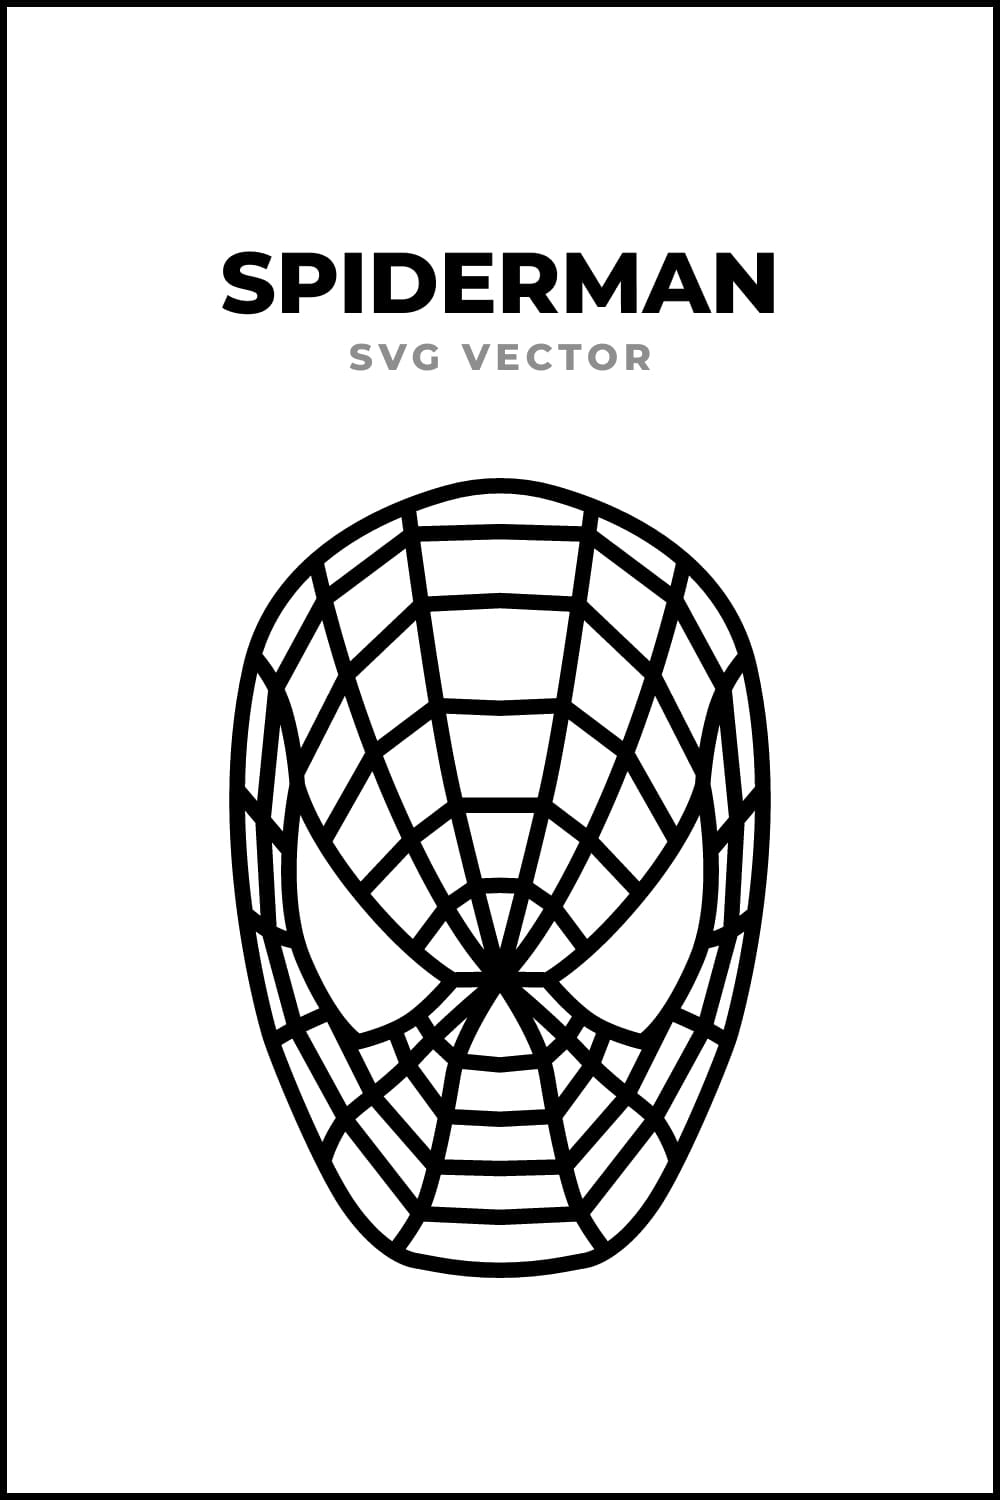 Spiderman face SVG Vector.